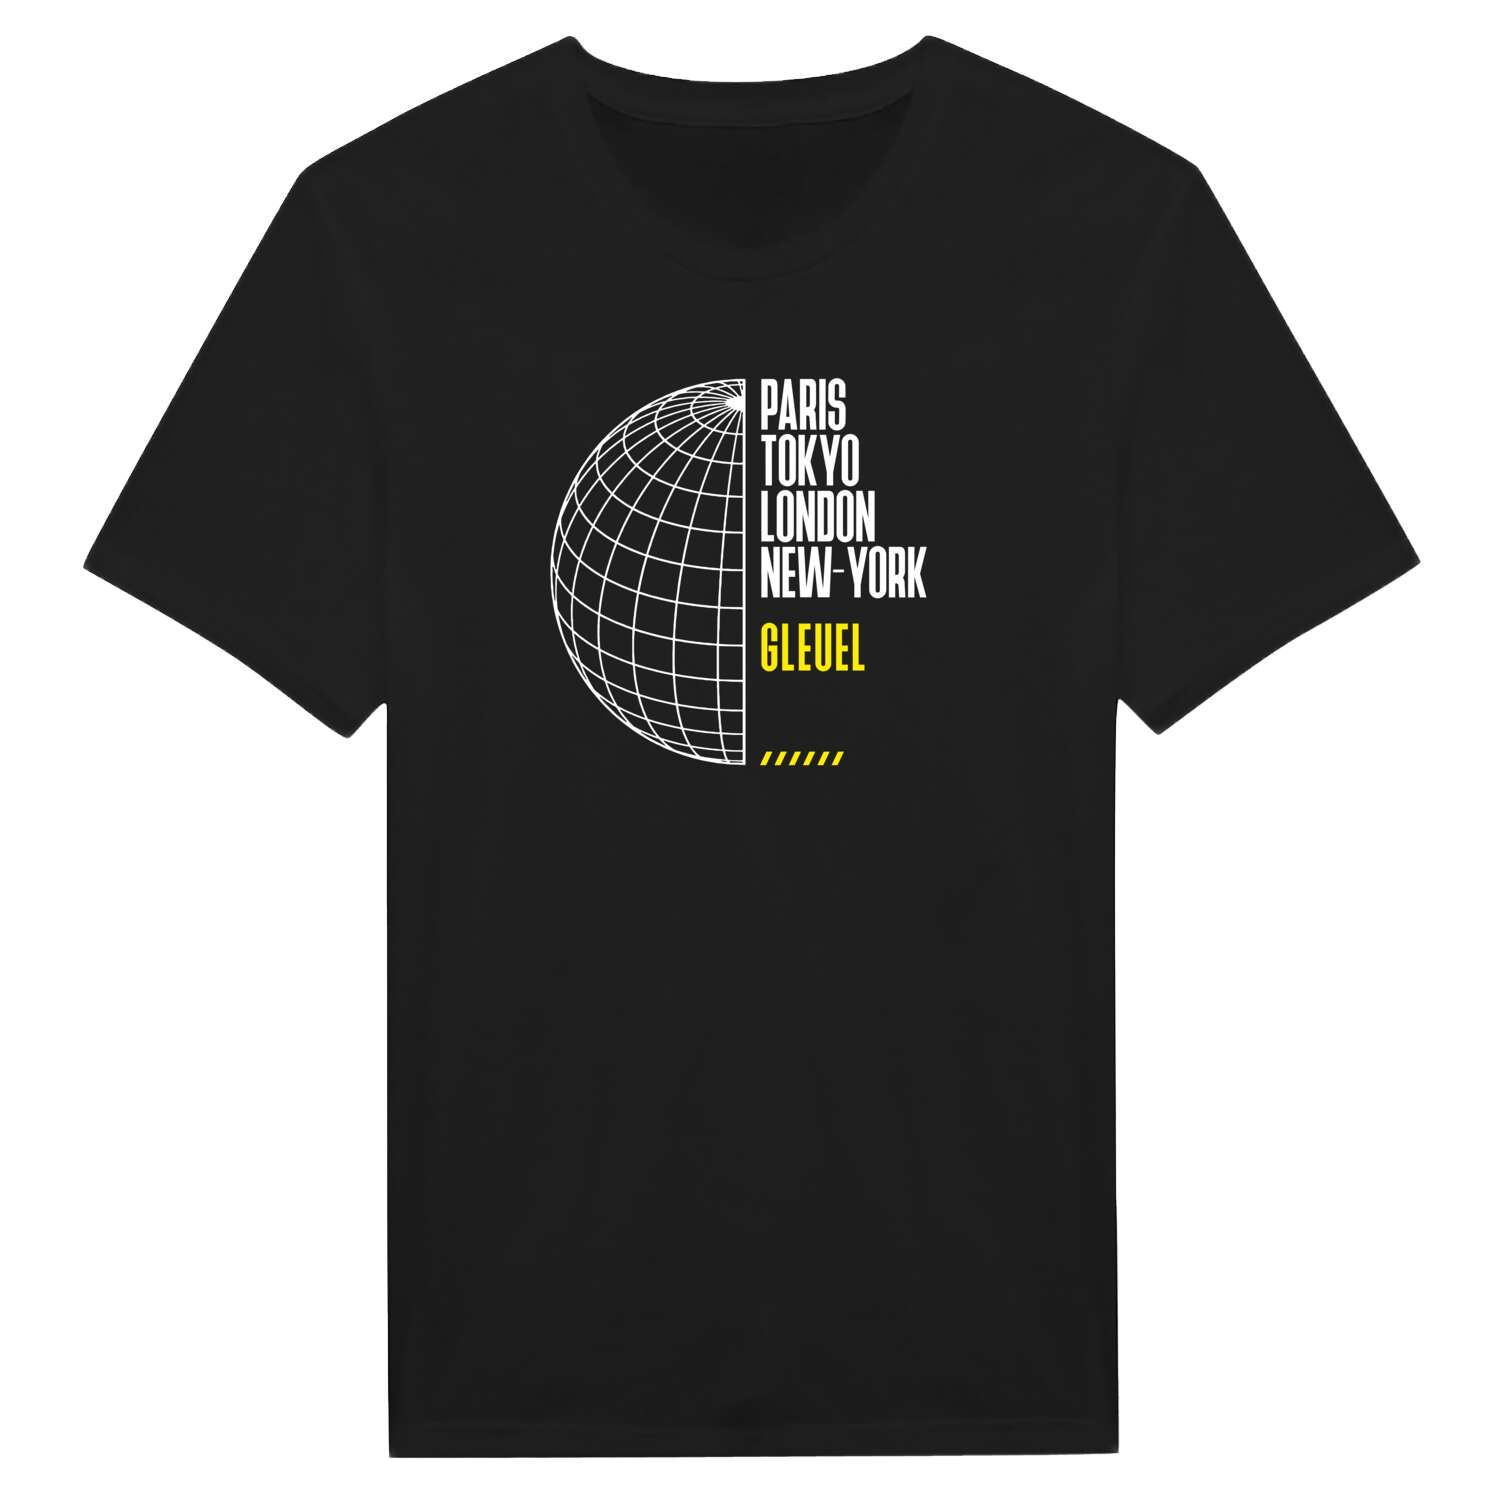 Gleuel T-Shirt »Paris Tokyo London«